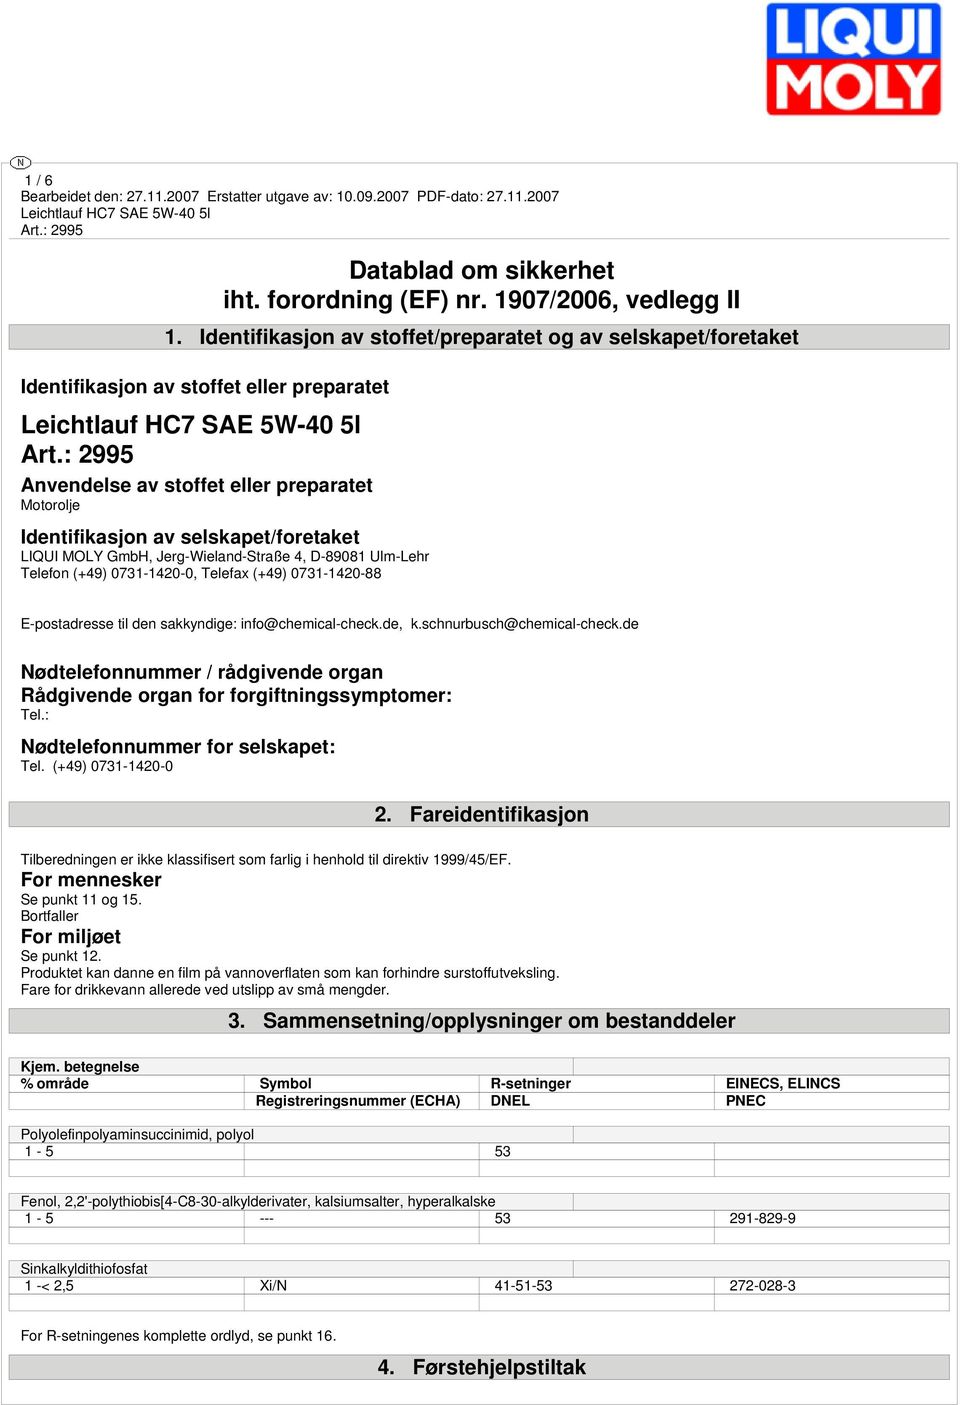 MOLY GmbH, Jerg-Wieland-Straße 4, D-89081 Ulm-Lehr Telefon (+49) 0731-1420-0, Telefax (+49) 0731-1420-88 E-postadresse til den sakkyndige: info@chemical-check.de, k.schnurbusch@chemical-check.